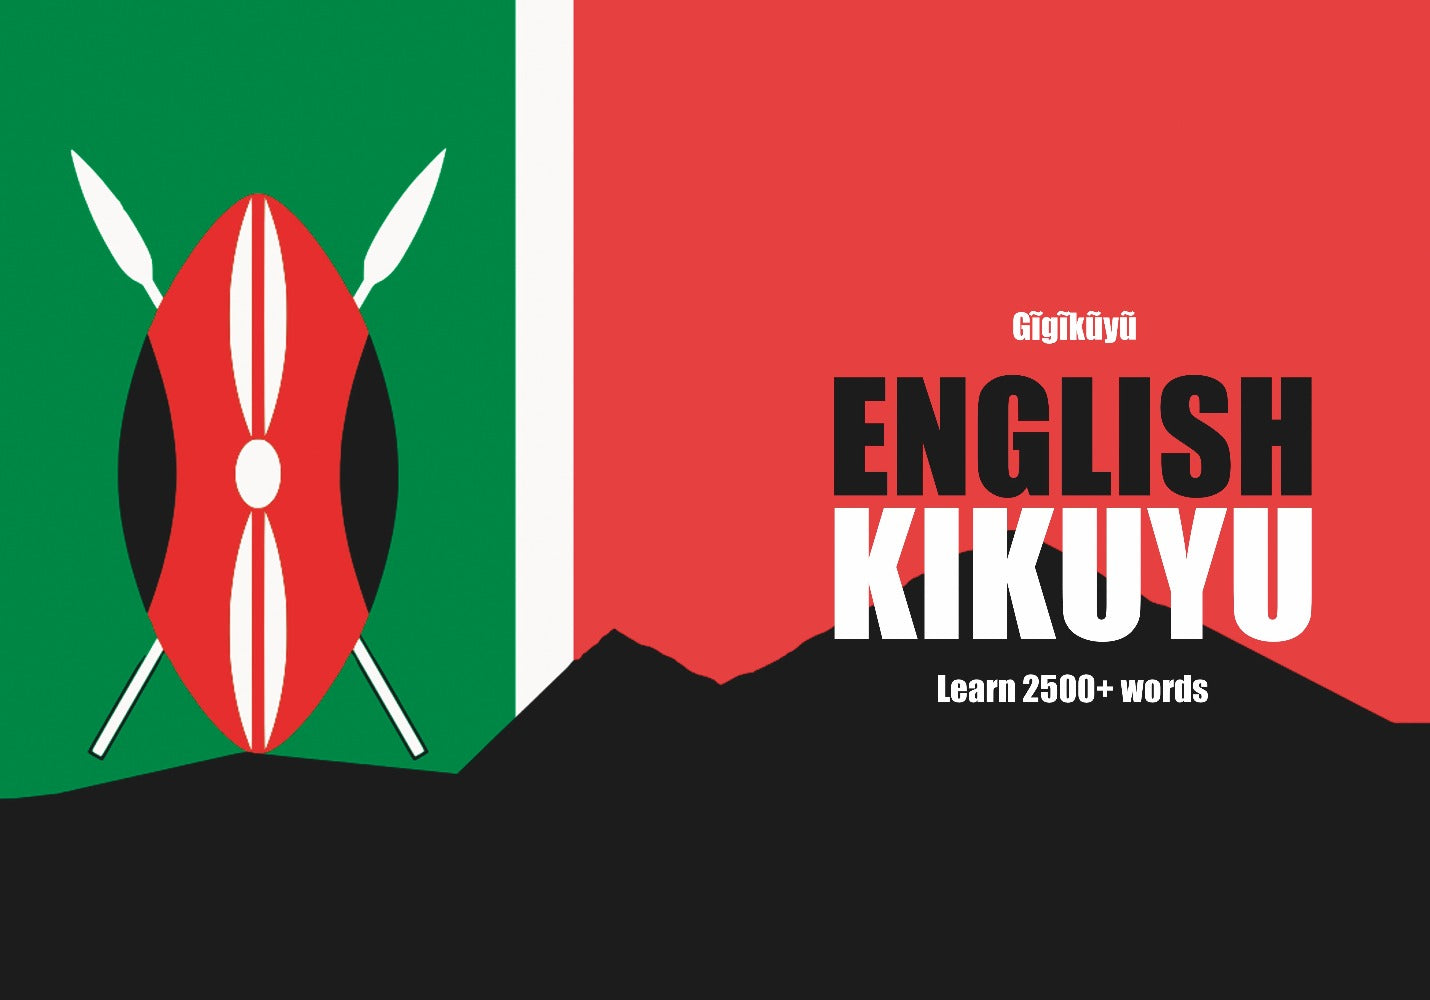 Kikuyu language learning notebook cover